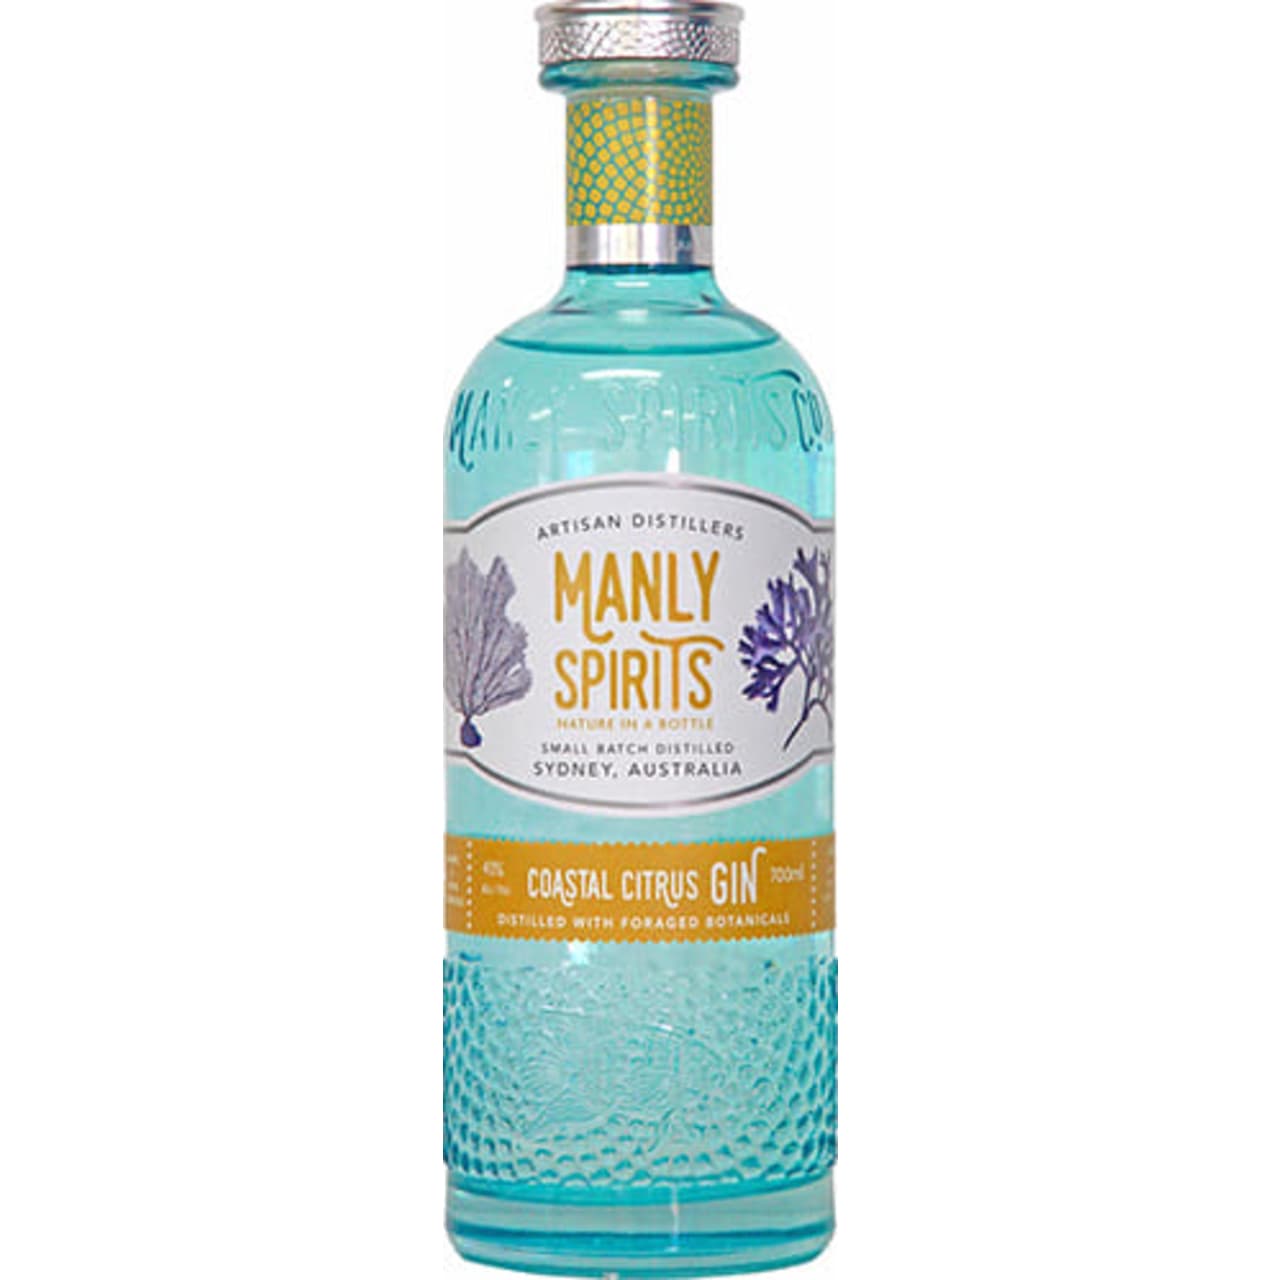 Product Image - Manly Spirits Co. Coastal Citrus Gin